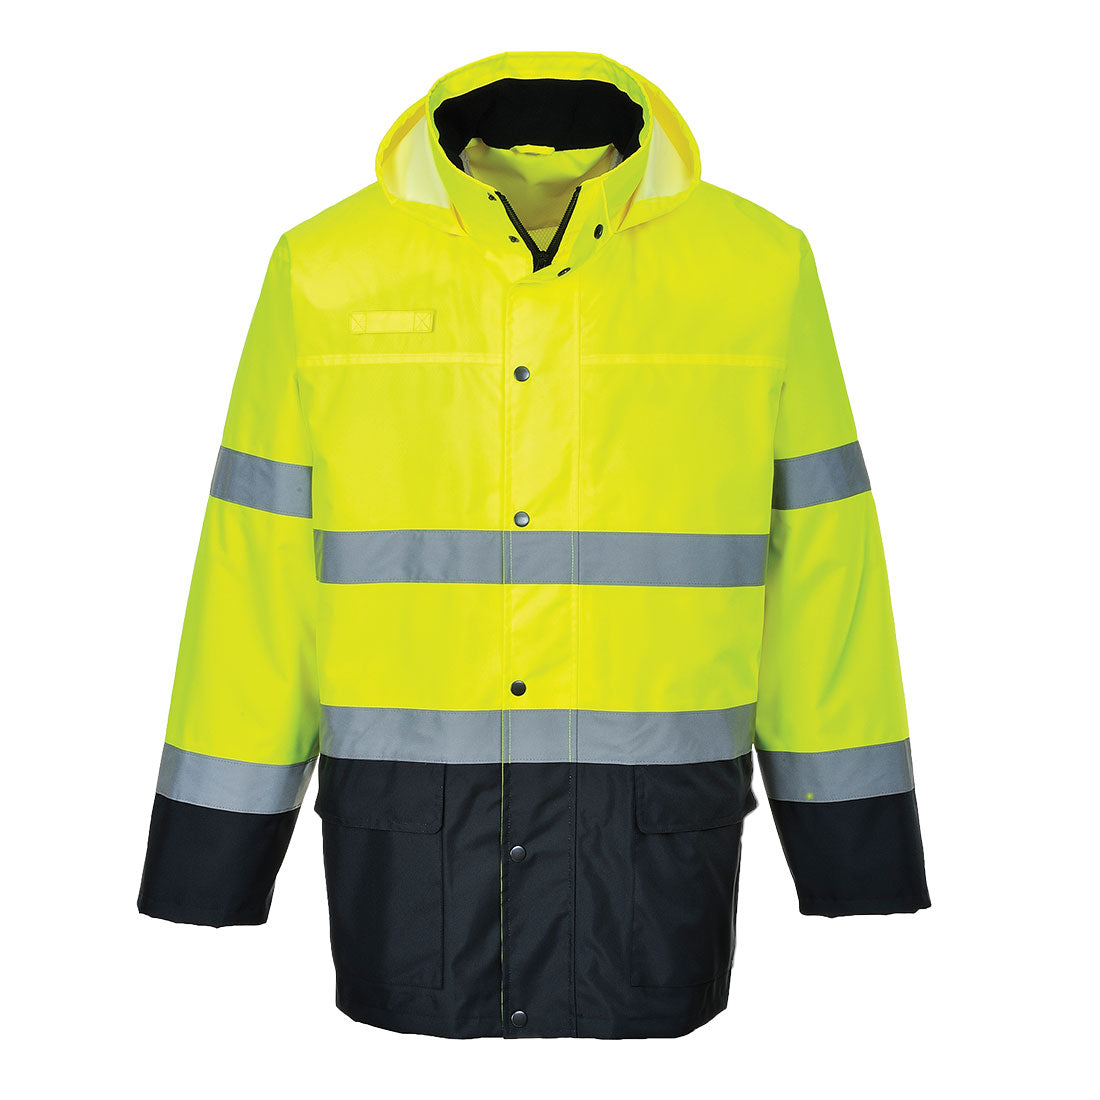 Portwest S166 Lite Two-Tone Hi Vis Traffic Jacket 1#colour_yellow-navy